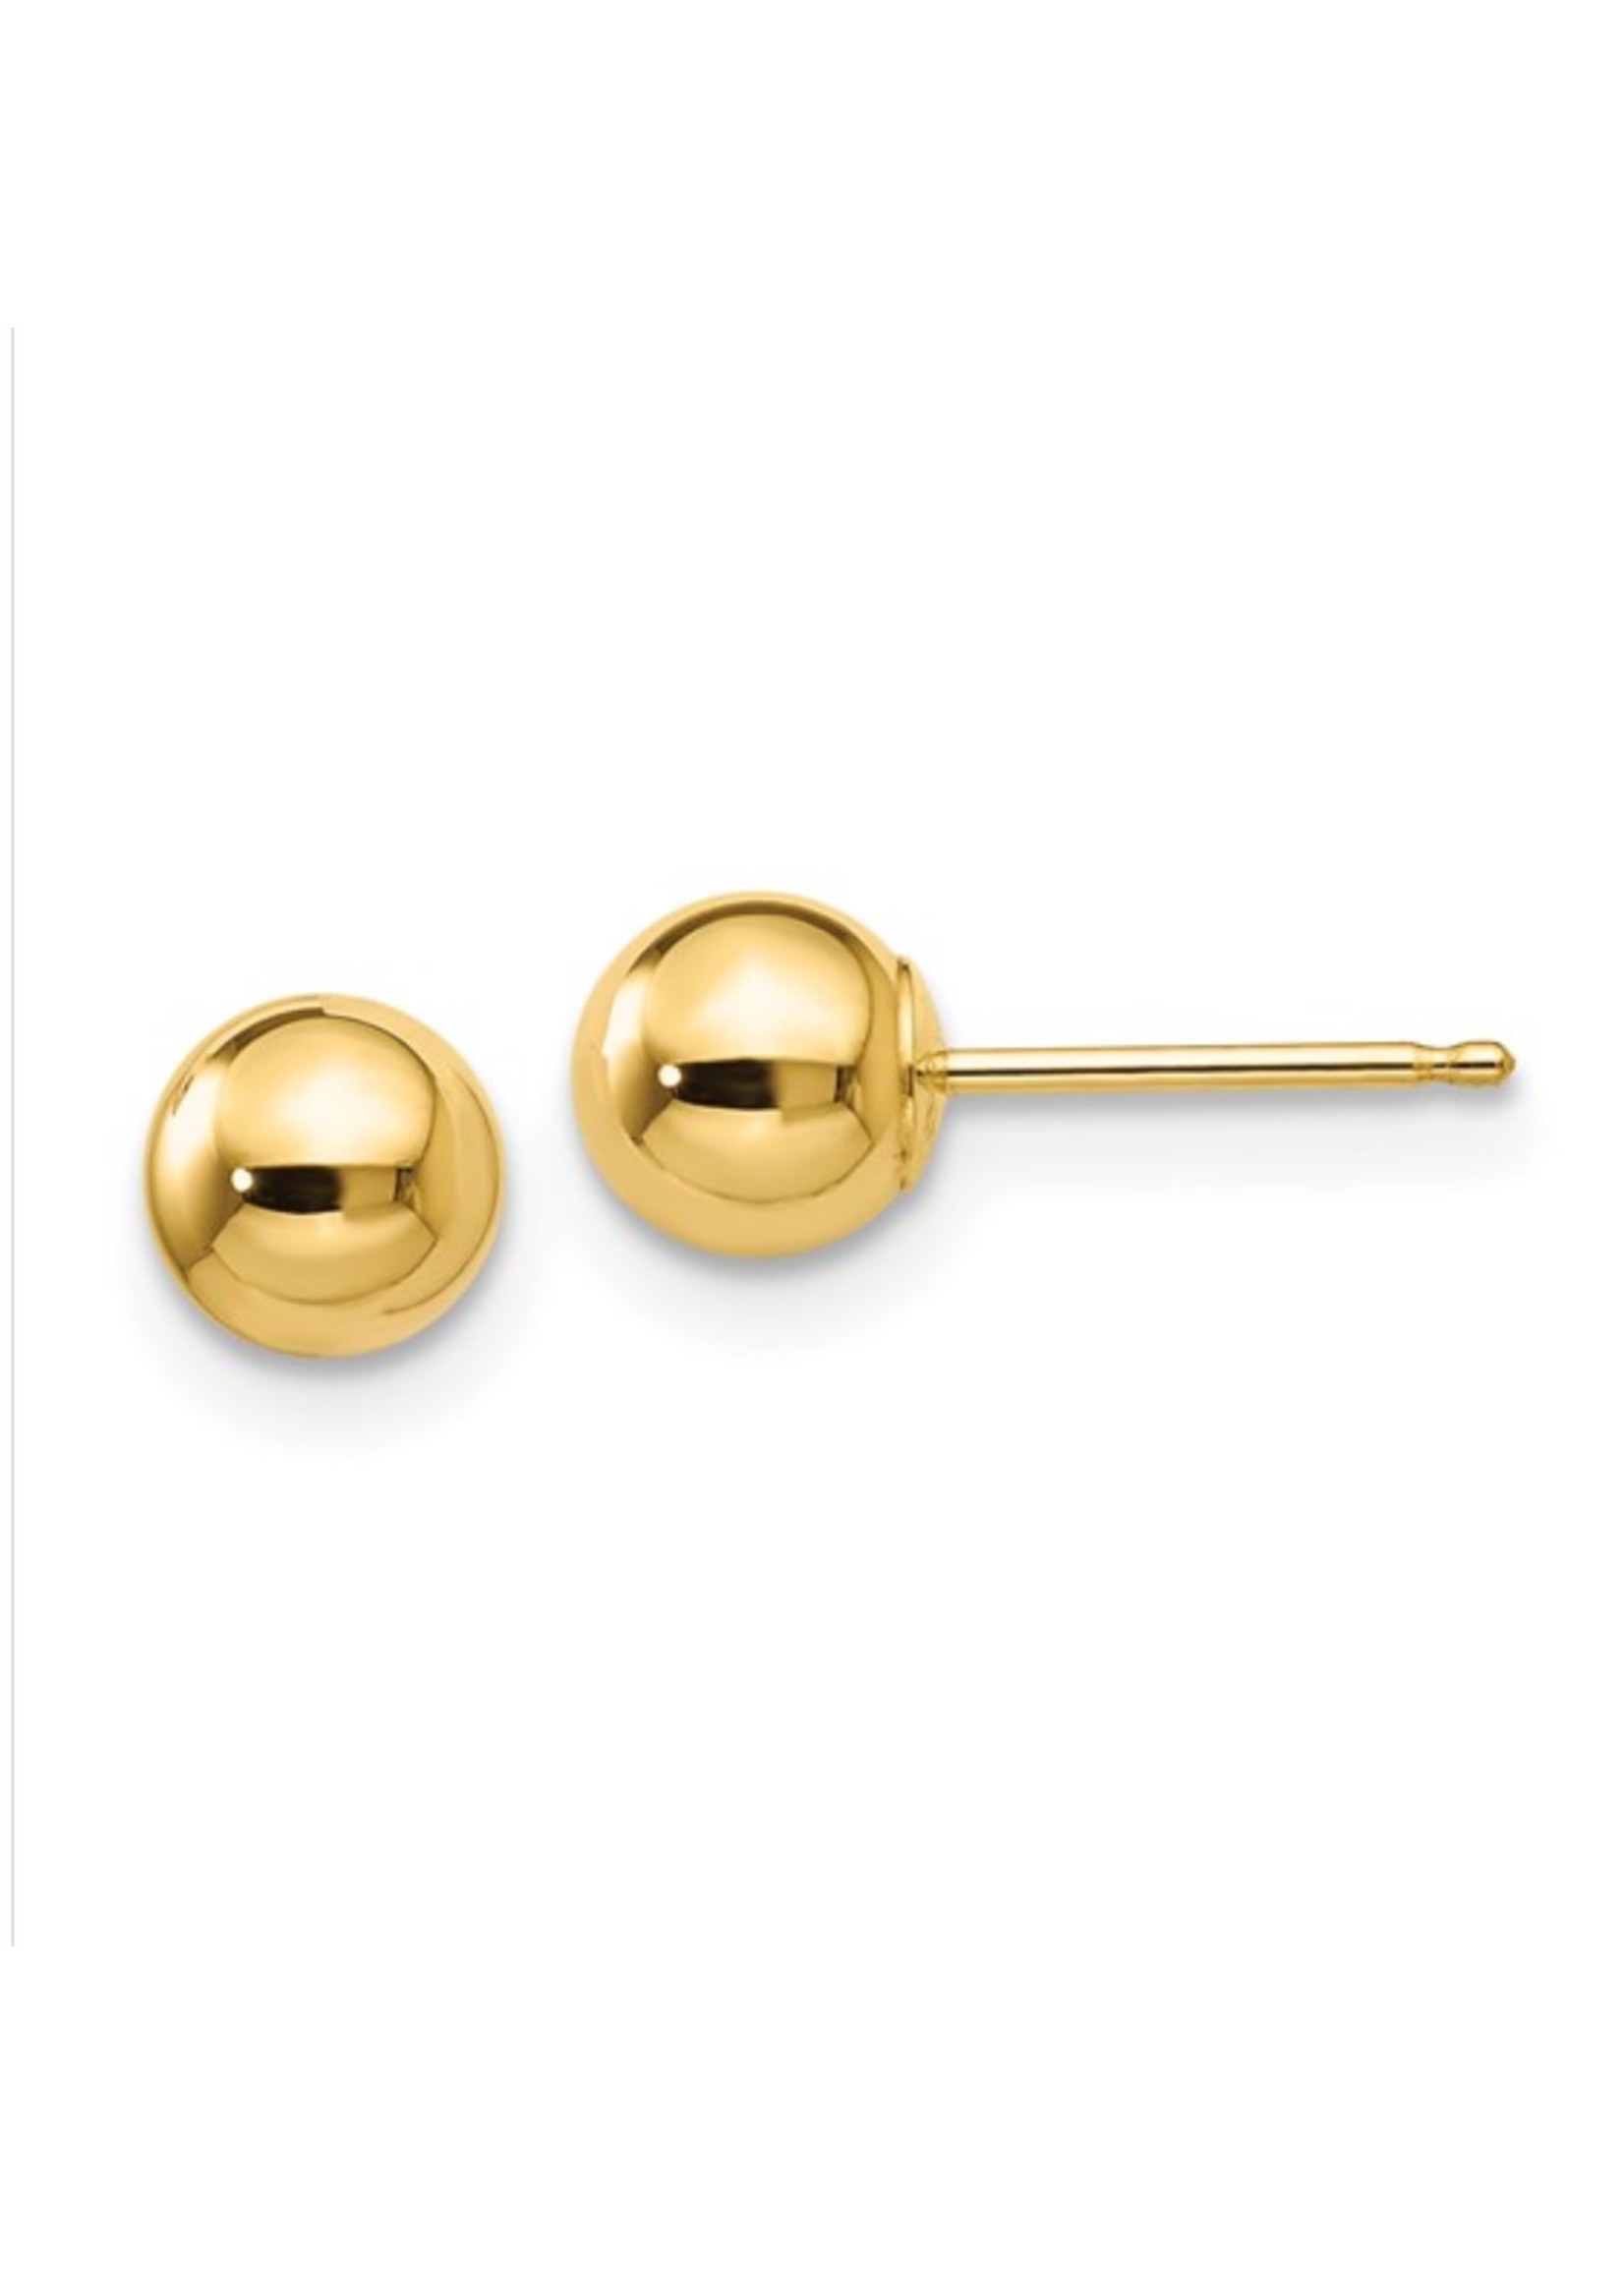 Quality Gold Inc. Earring Jacket 14k Polished 5mm Ball Post